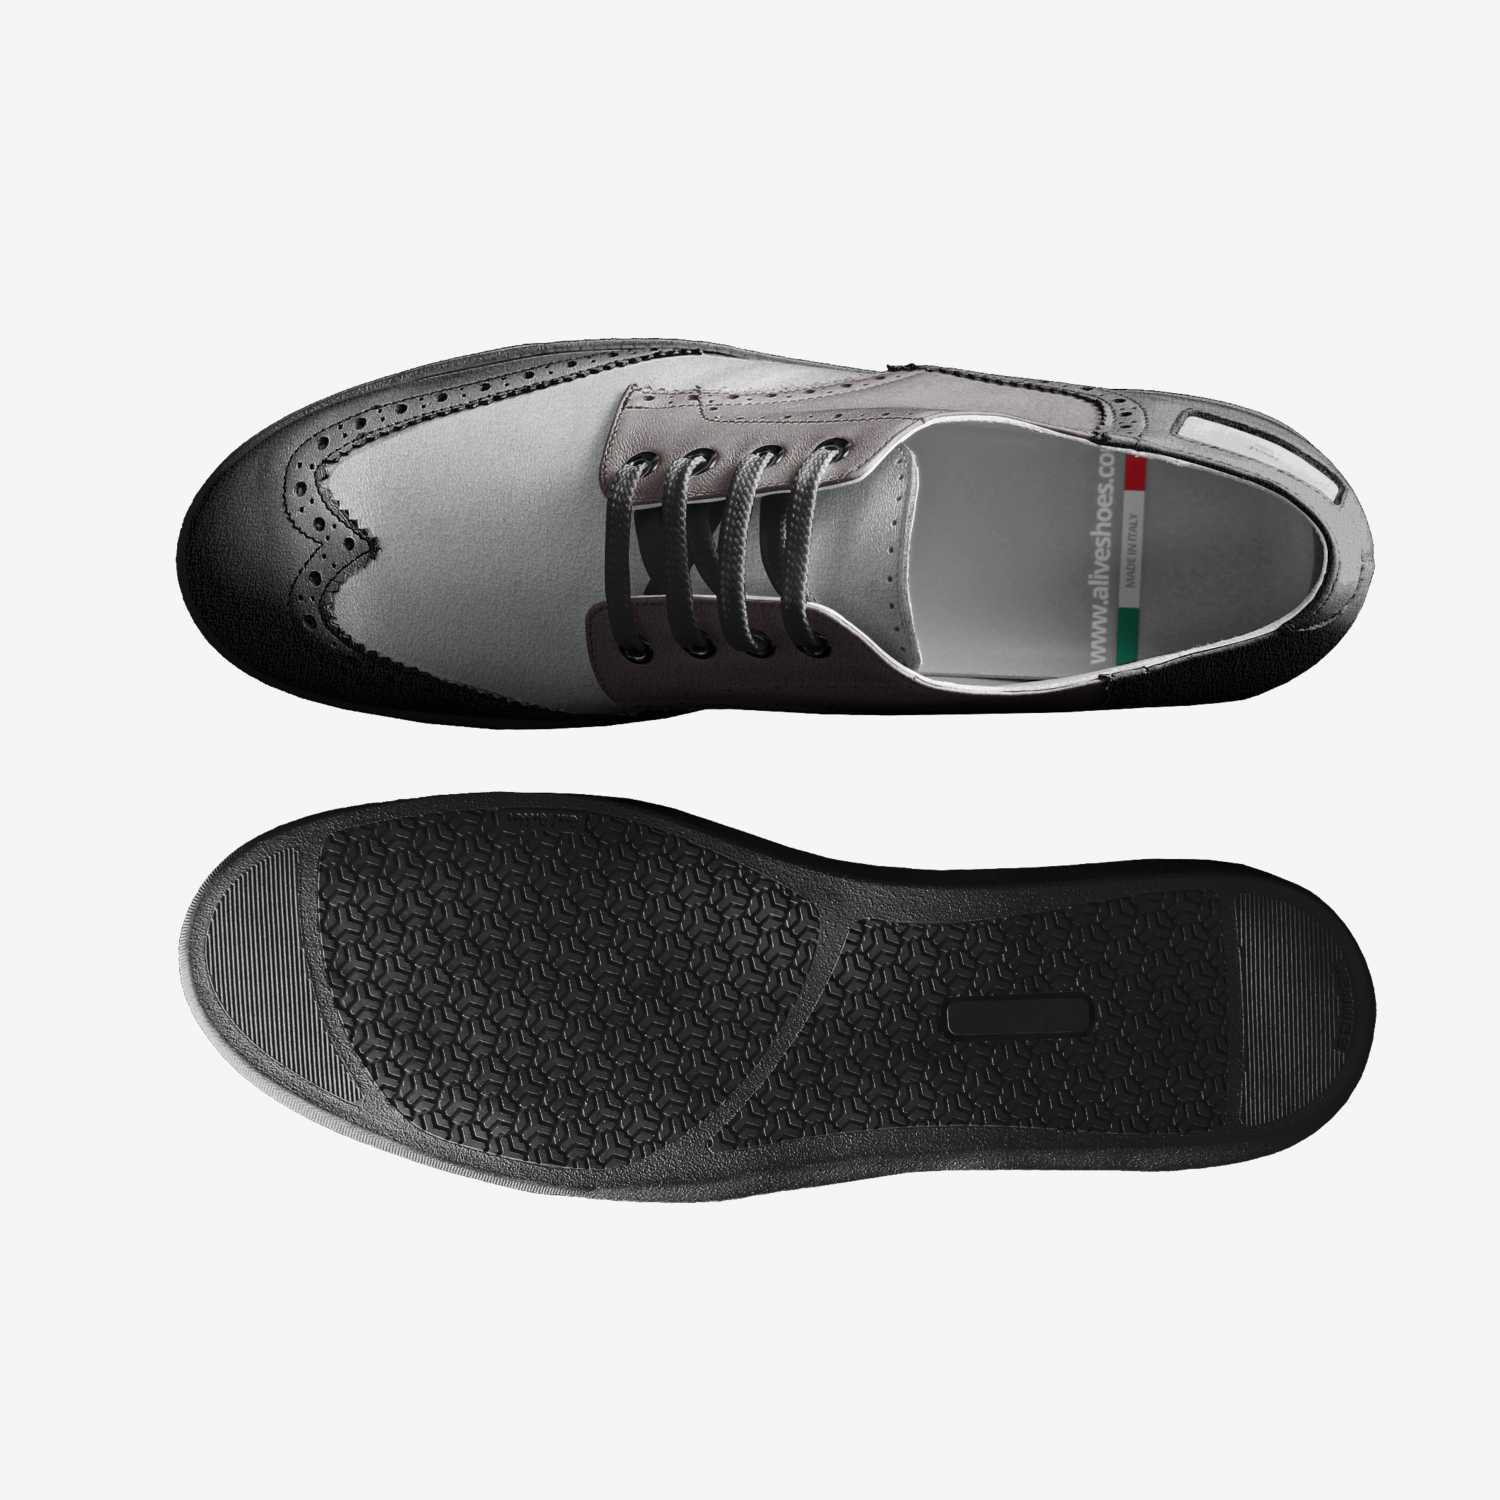 seert | A Custom Shoe concept by Iris Tapia